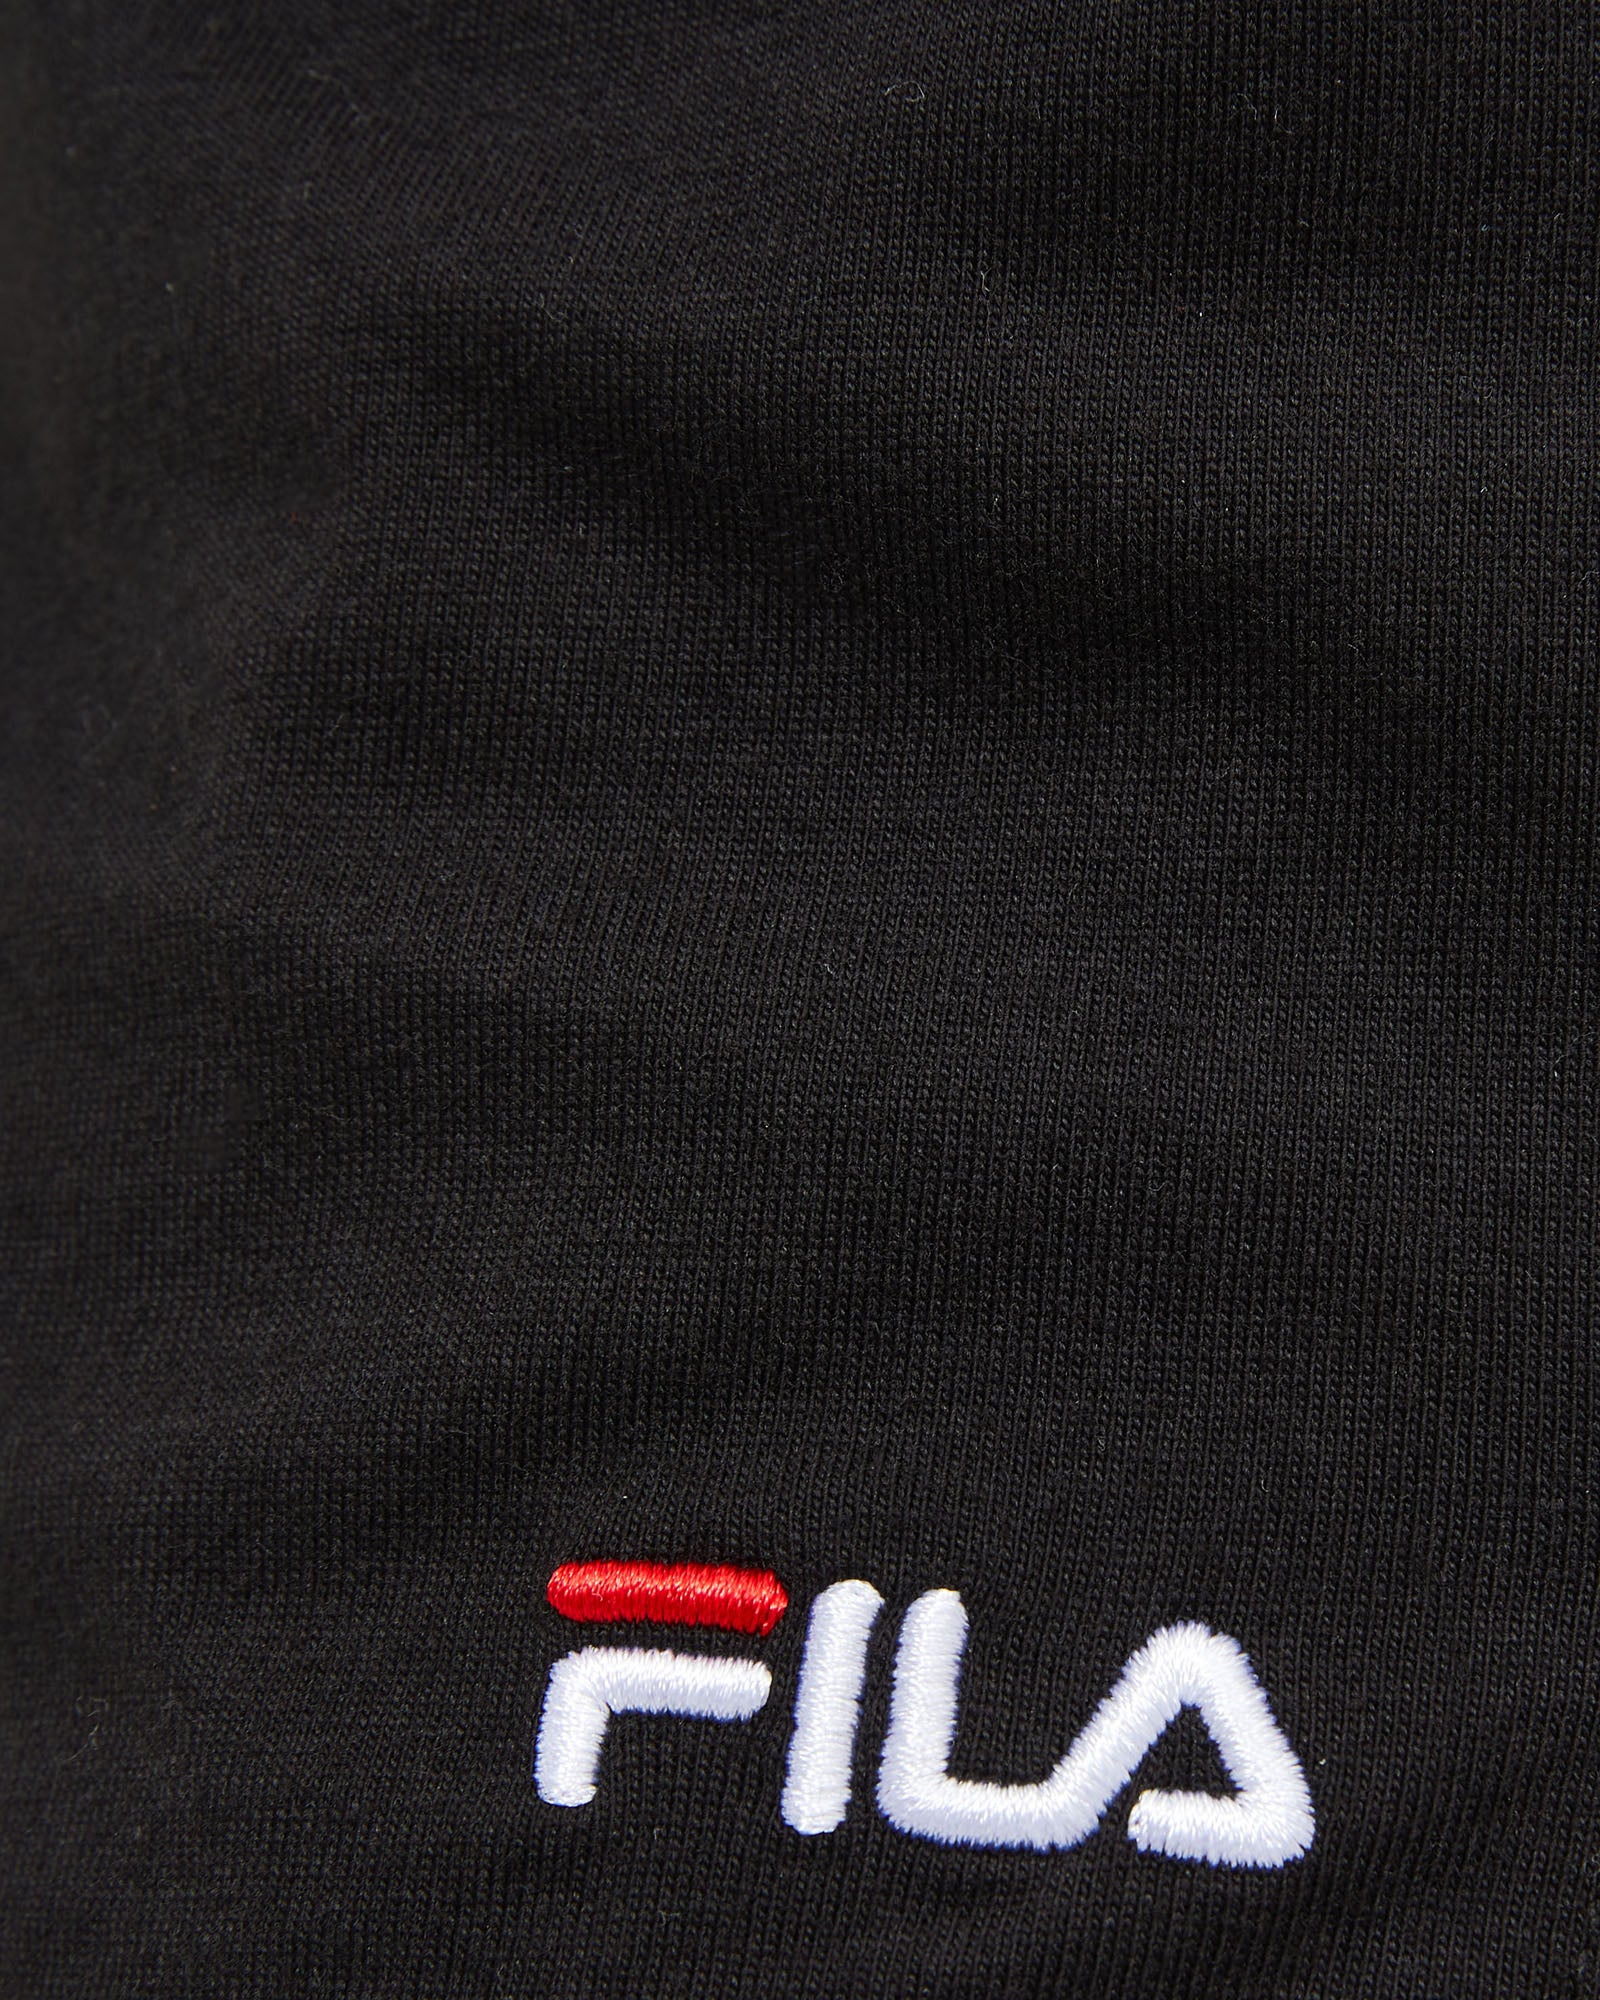 Classic Women's Jersey Shorts | FILA Australia